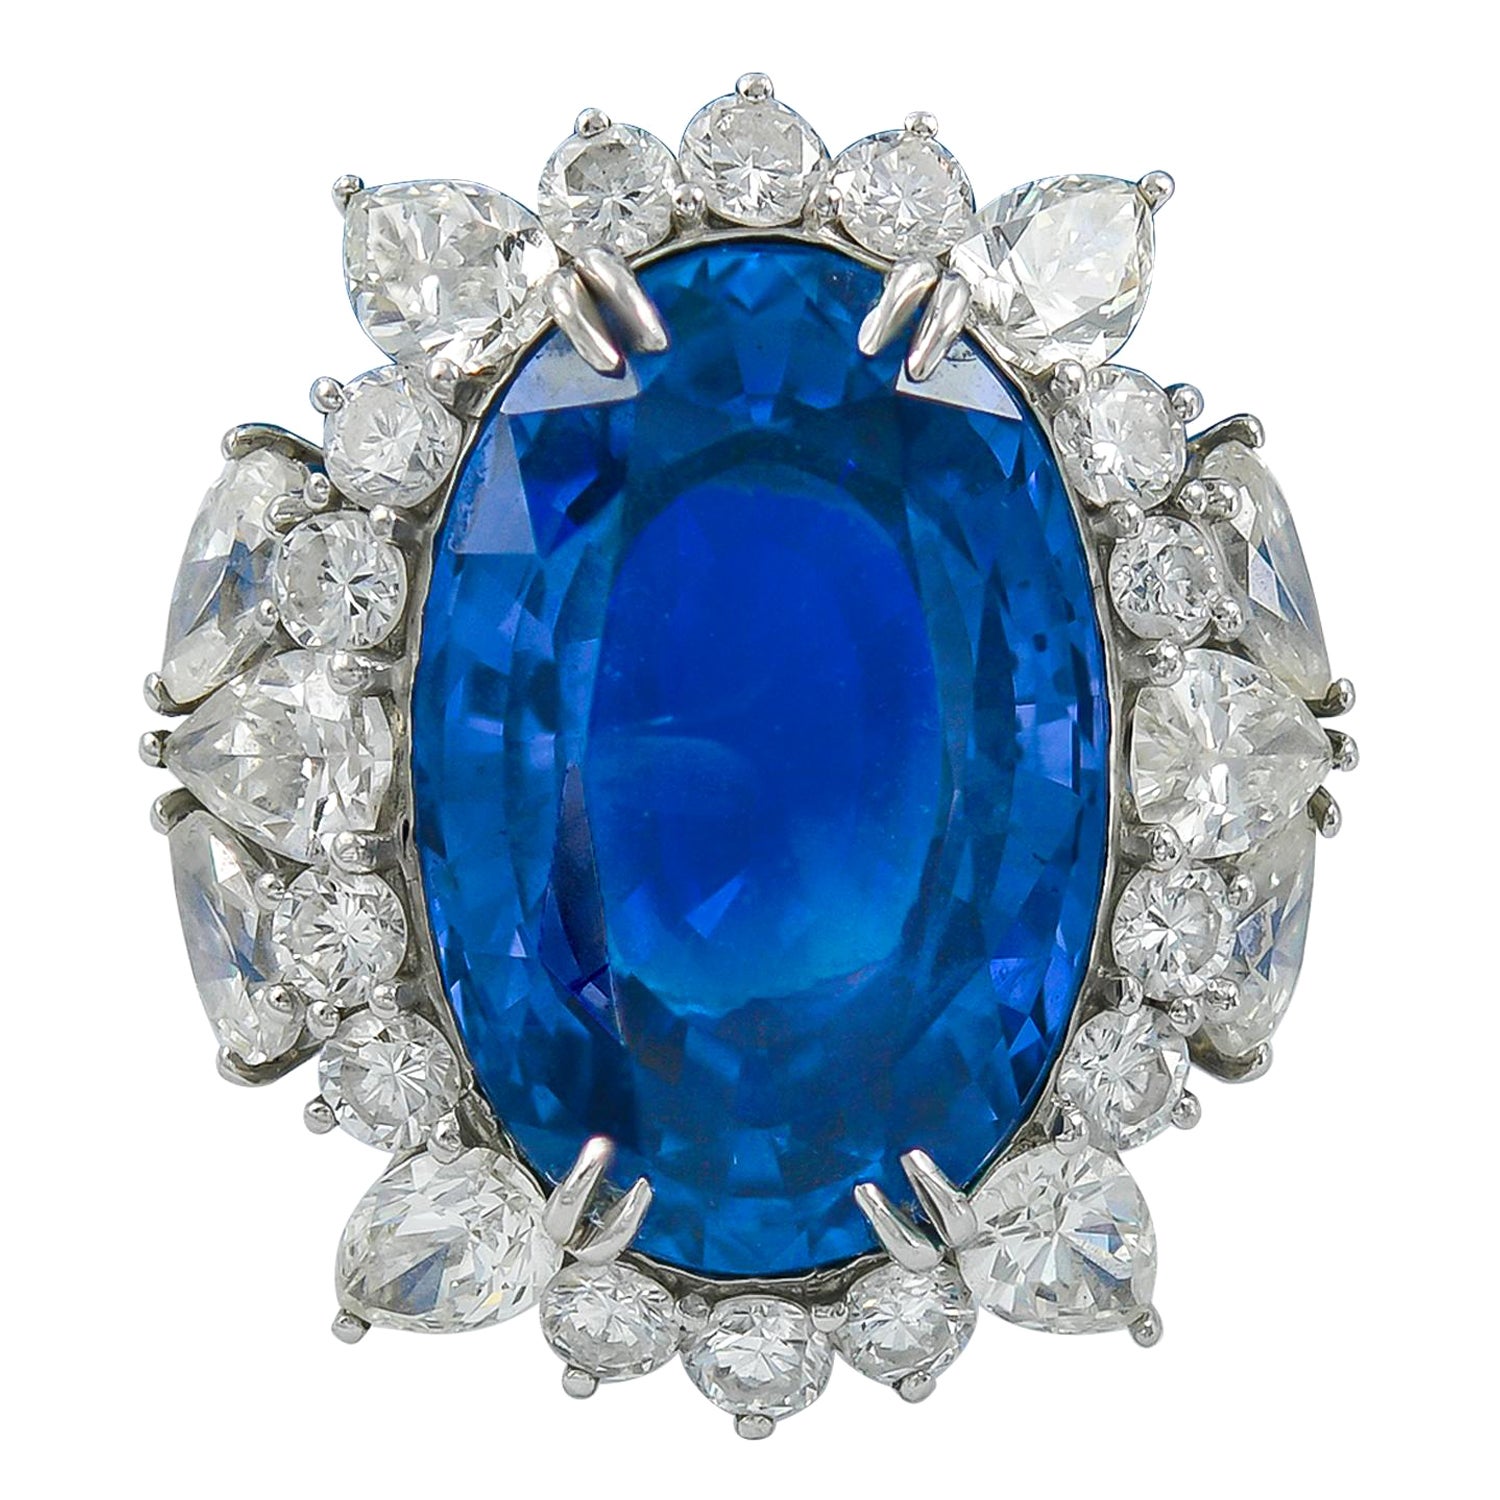 Spectra Fine Jewelry Certified 26.19 Carat Ceylon Sapphire Diamond Ring For Sale